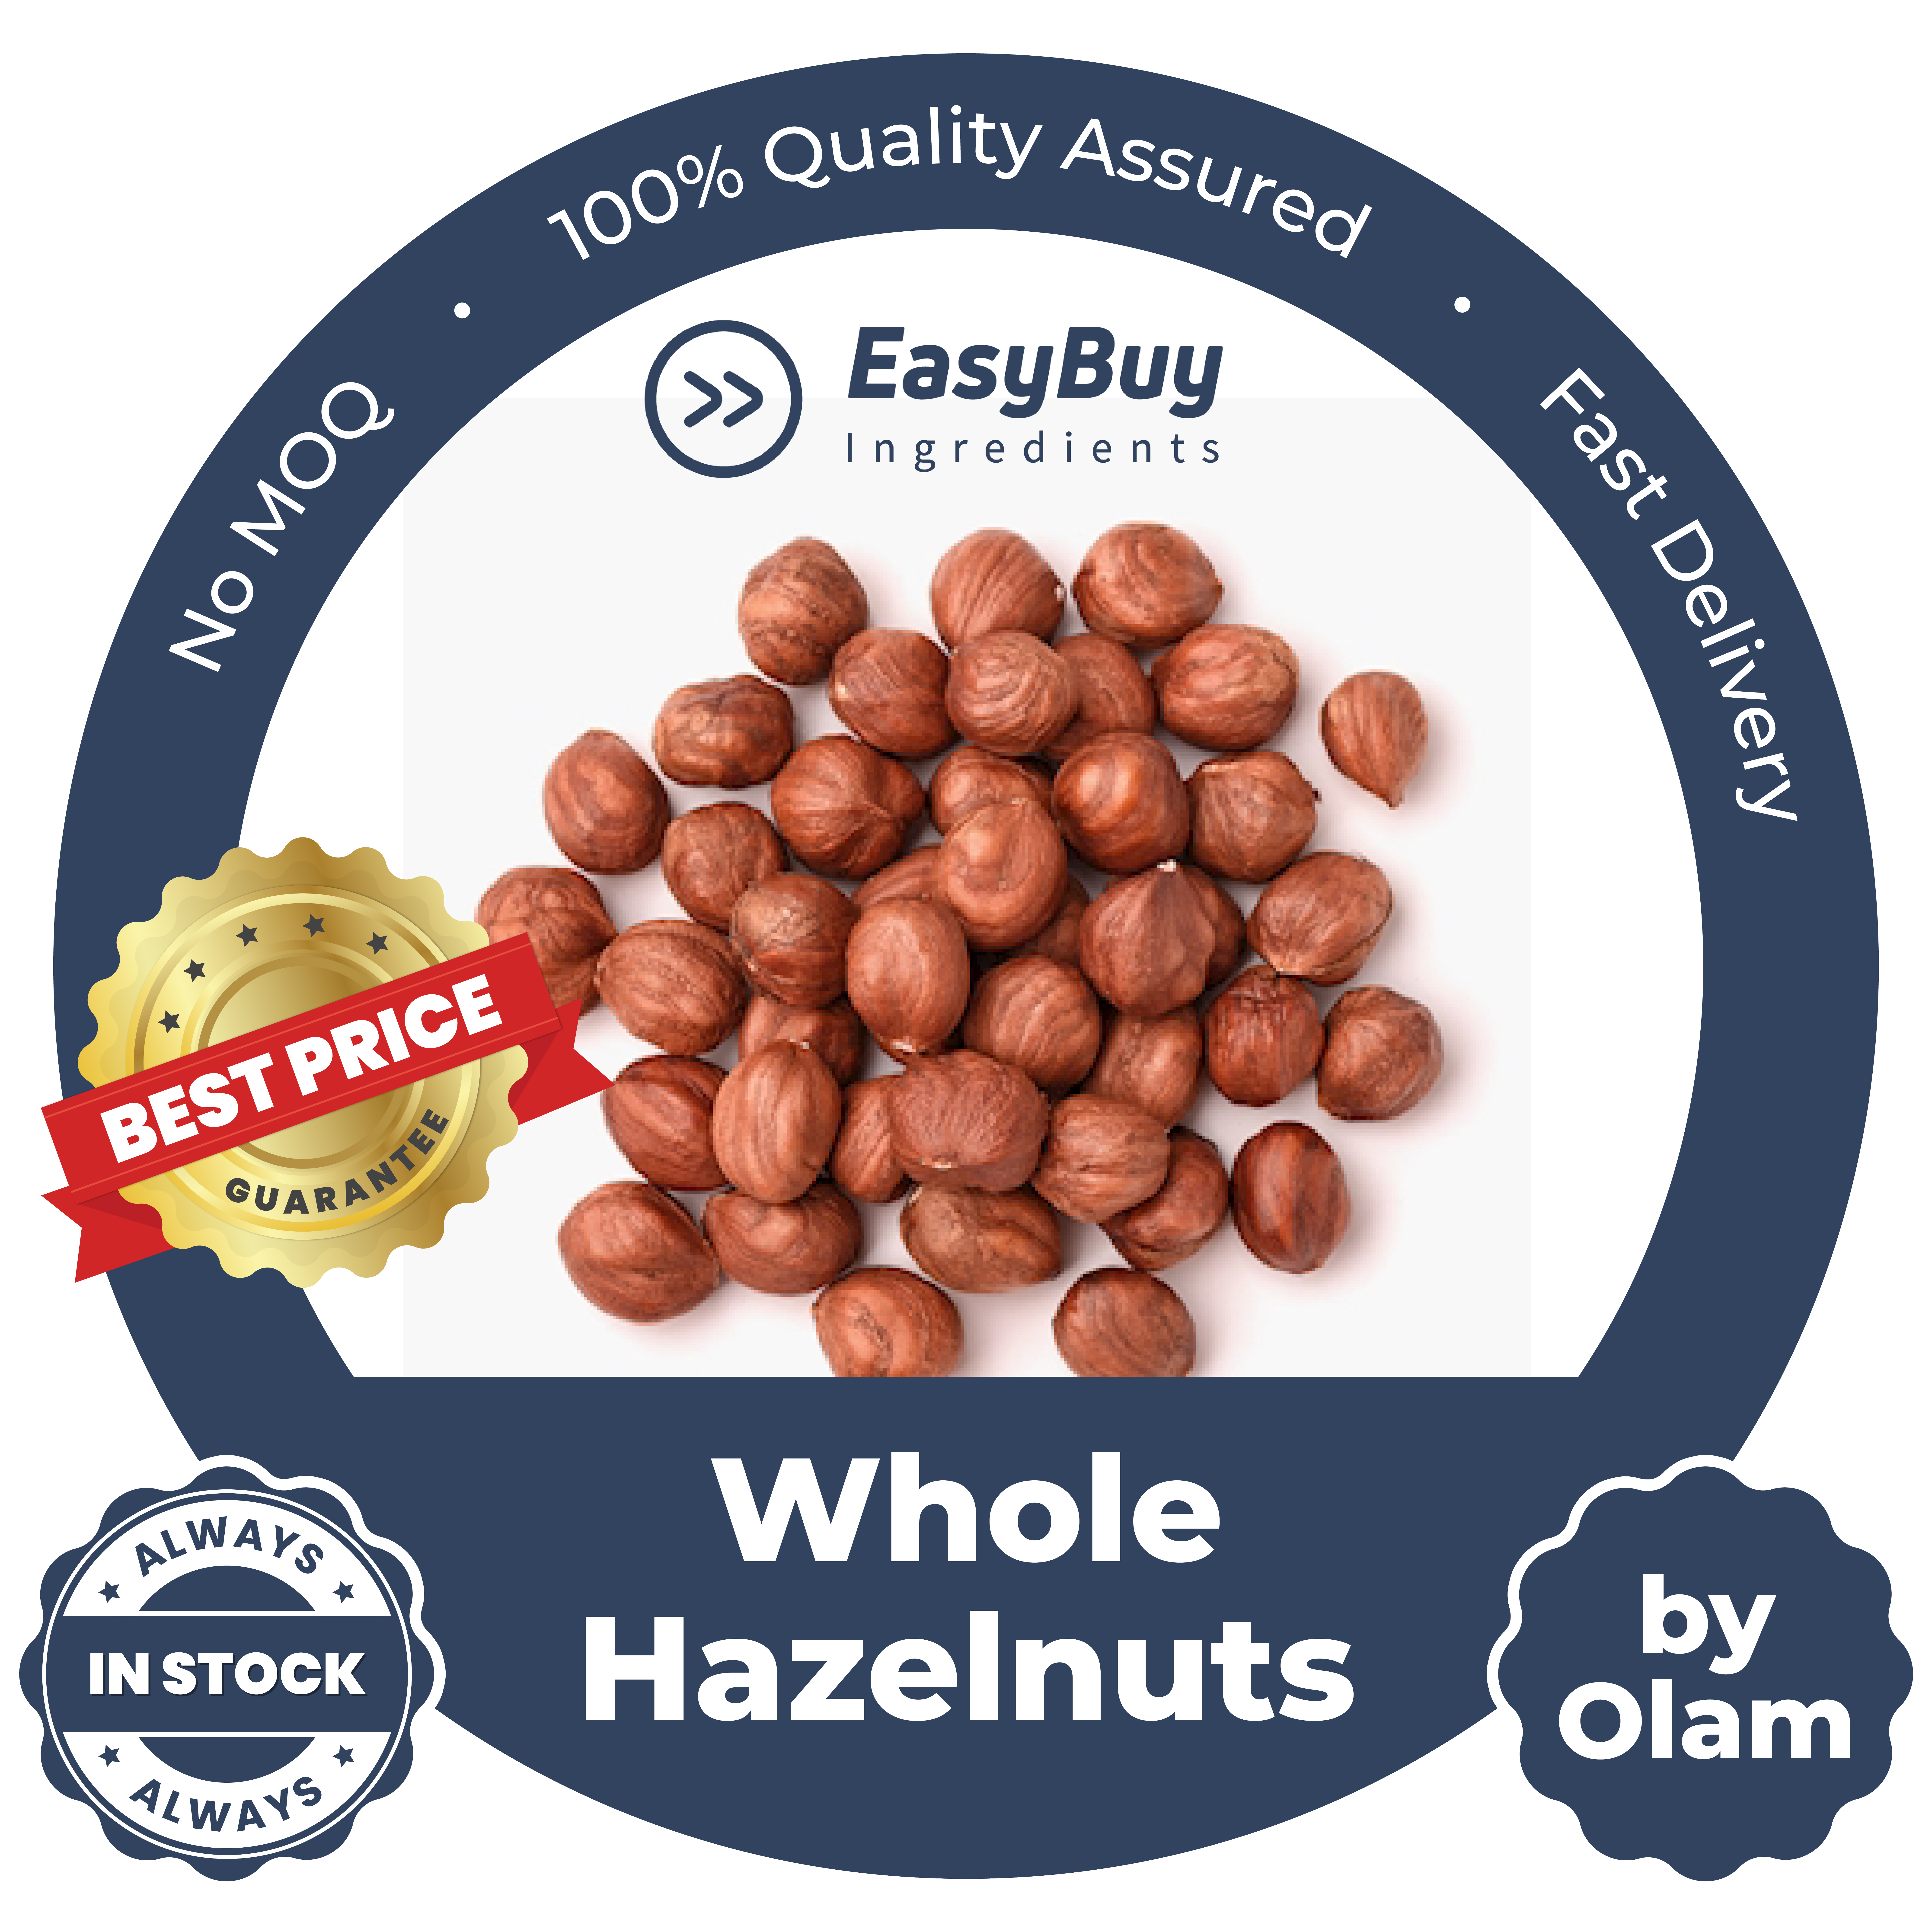 OFI Whole Hazelnuts by Olam